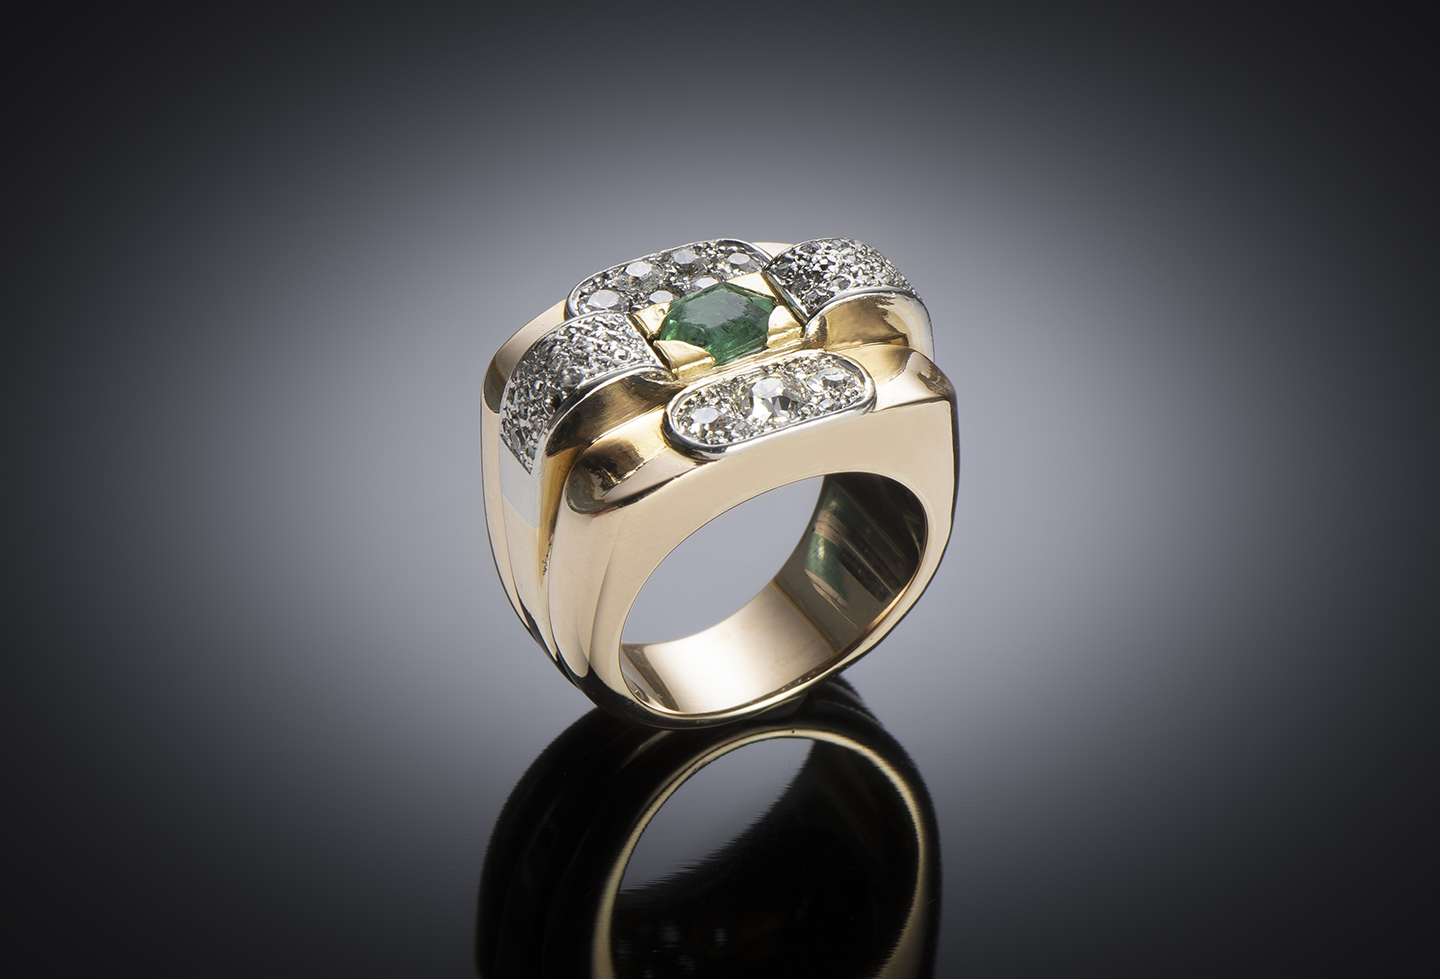 French ring emerald and diamonds circa 1940-1